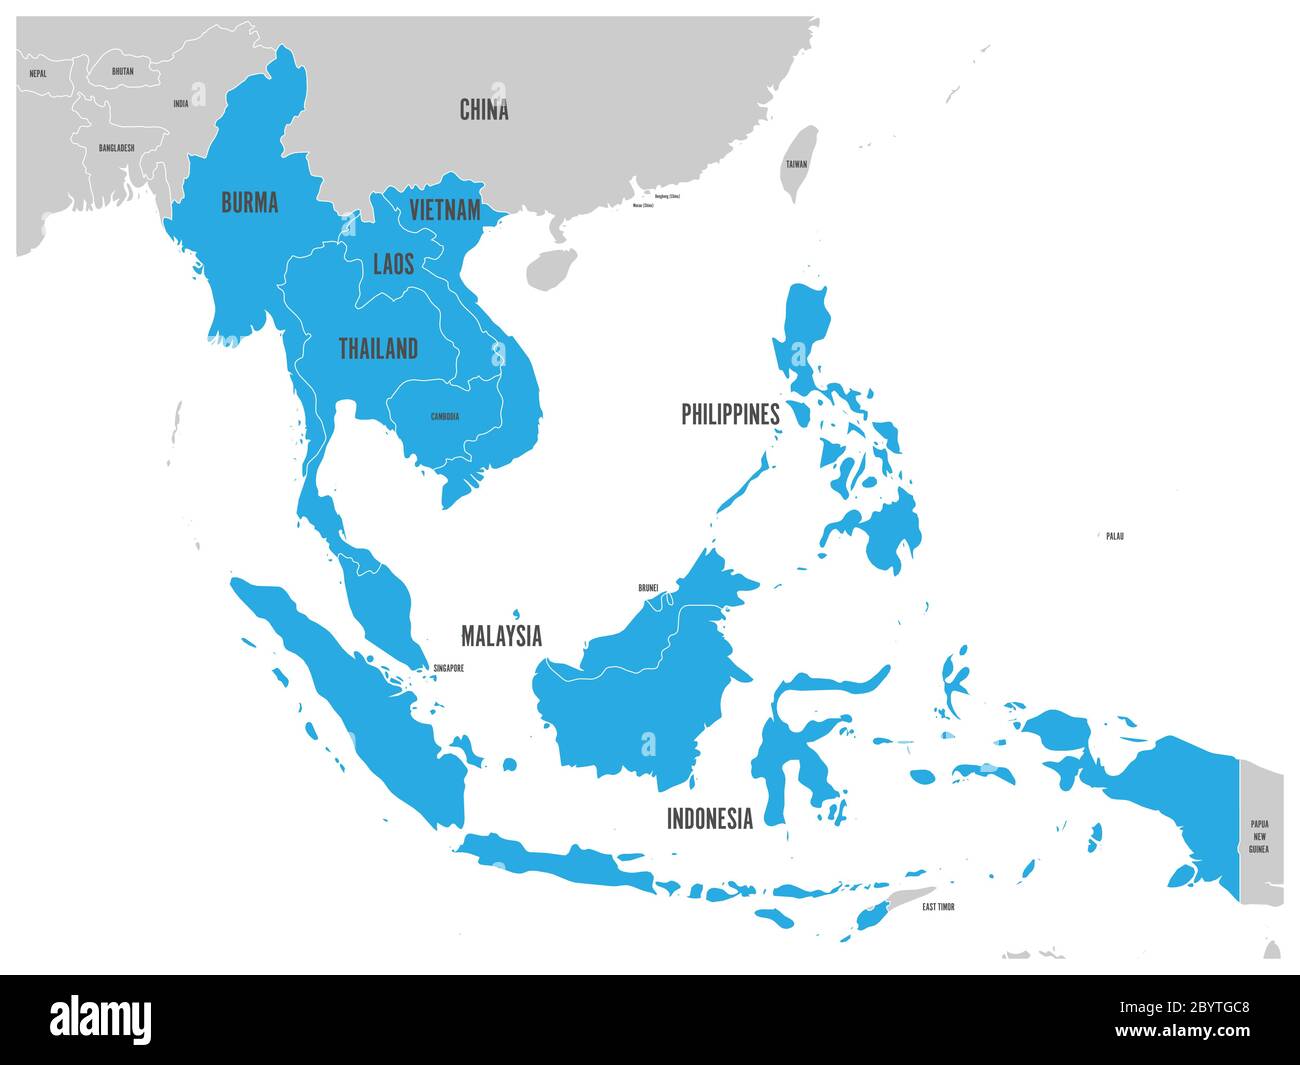 ASEAN Economic Community, AEC, MAP. Graue Karte mit blau hervorgehobenen Mitgliedsländern, Südostasien. Vektorgrafik. Stock Vektor